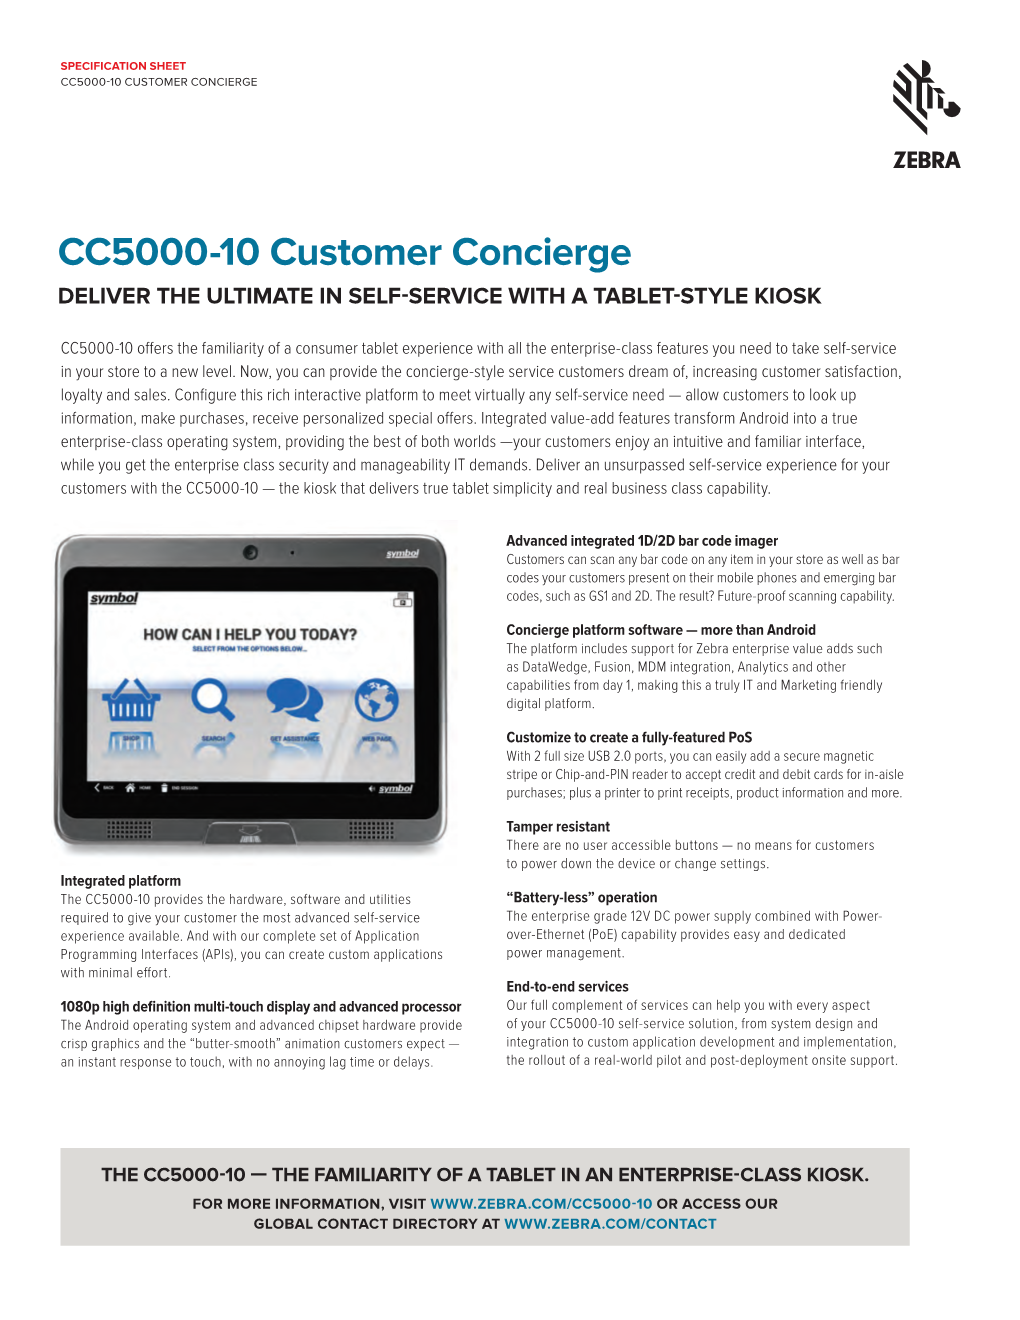 CC5000-10 Customer Concierge Specification Sheet